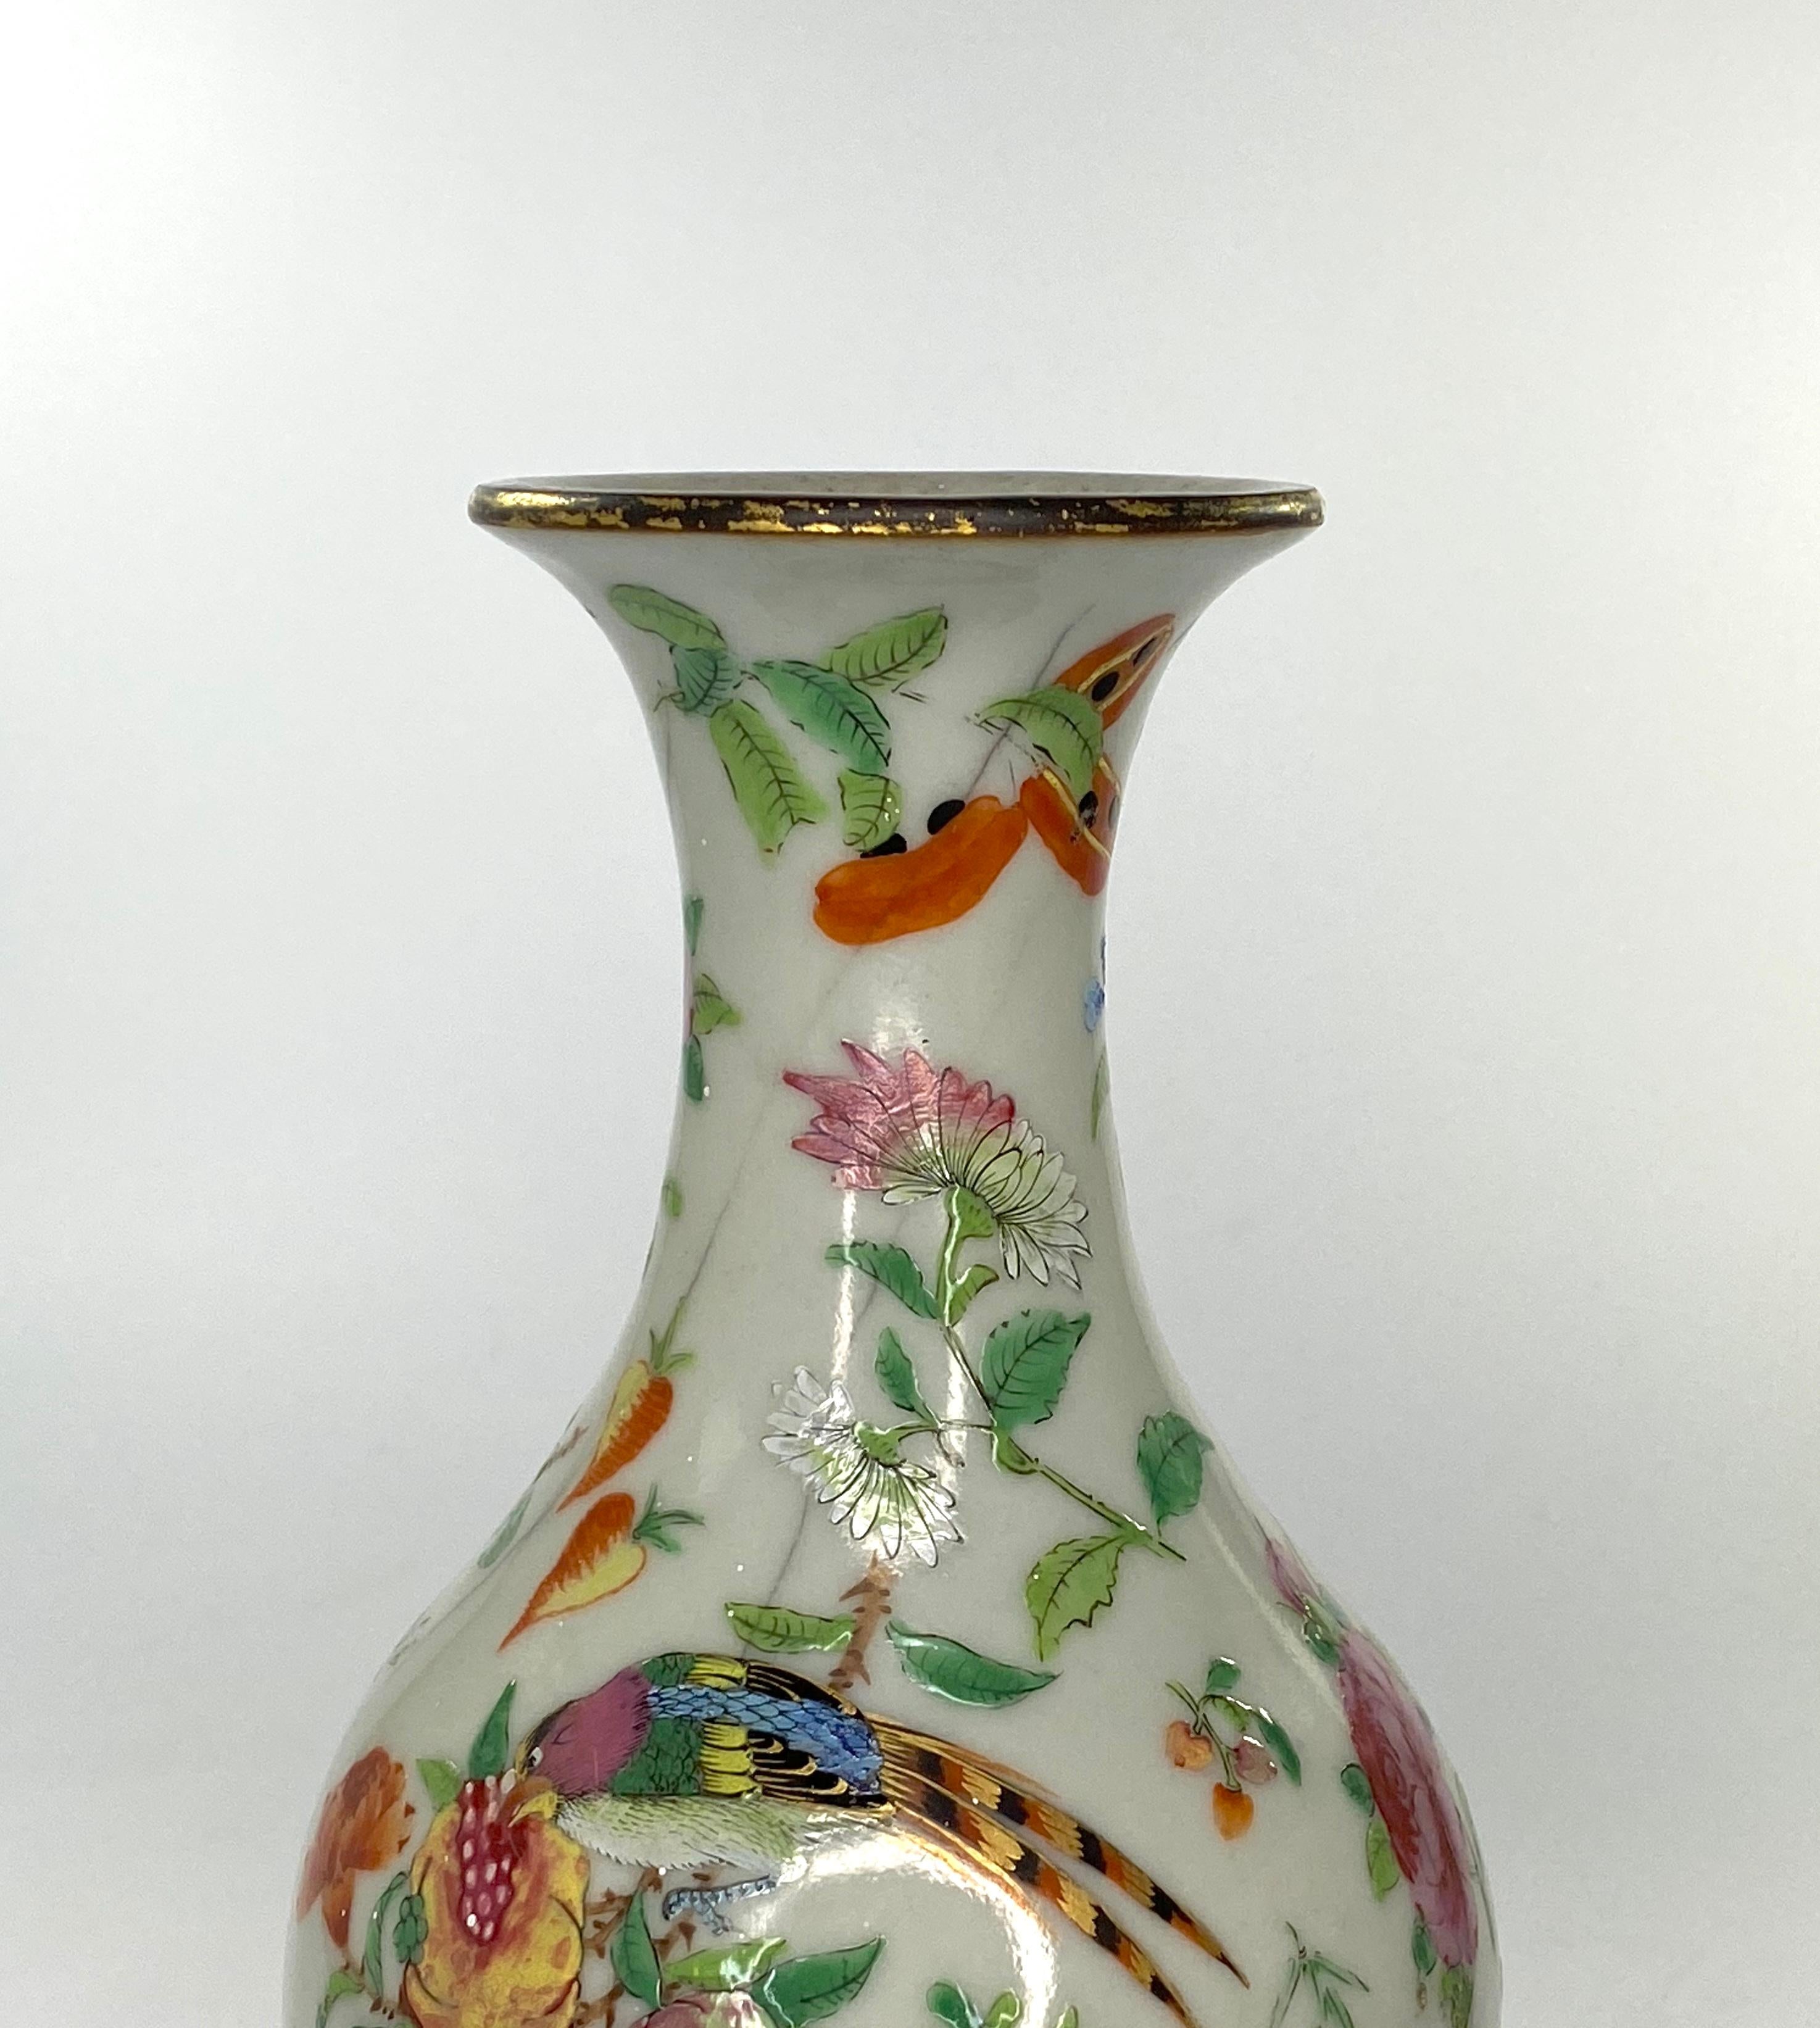 Porcelain Chinese Crackle Glaze Vases, Famille Rose Decoration, circa 1880